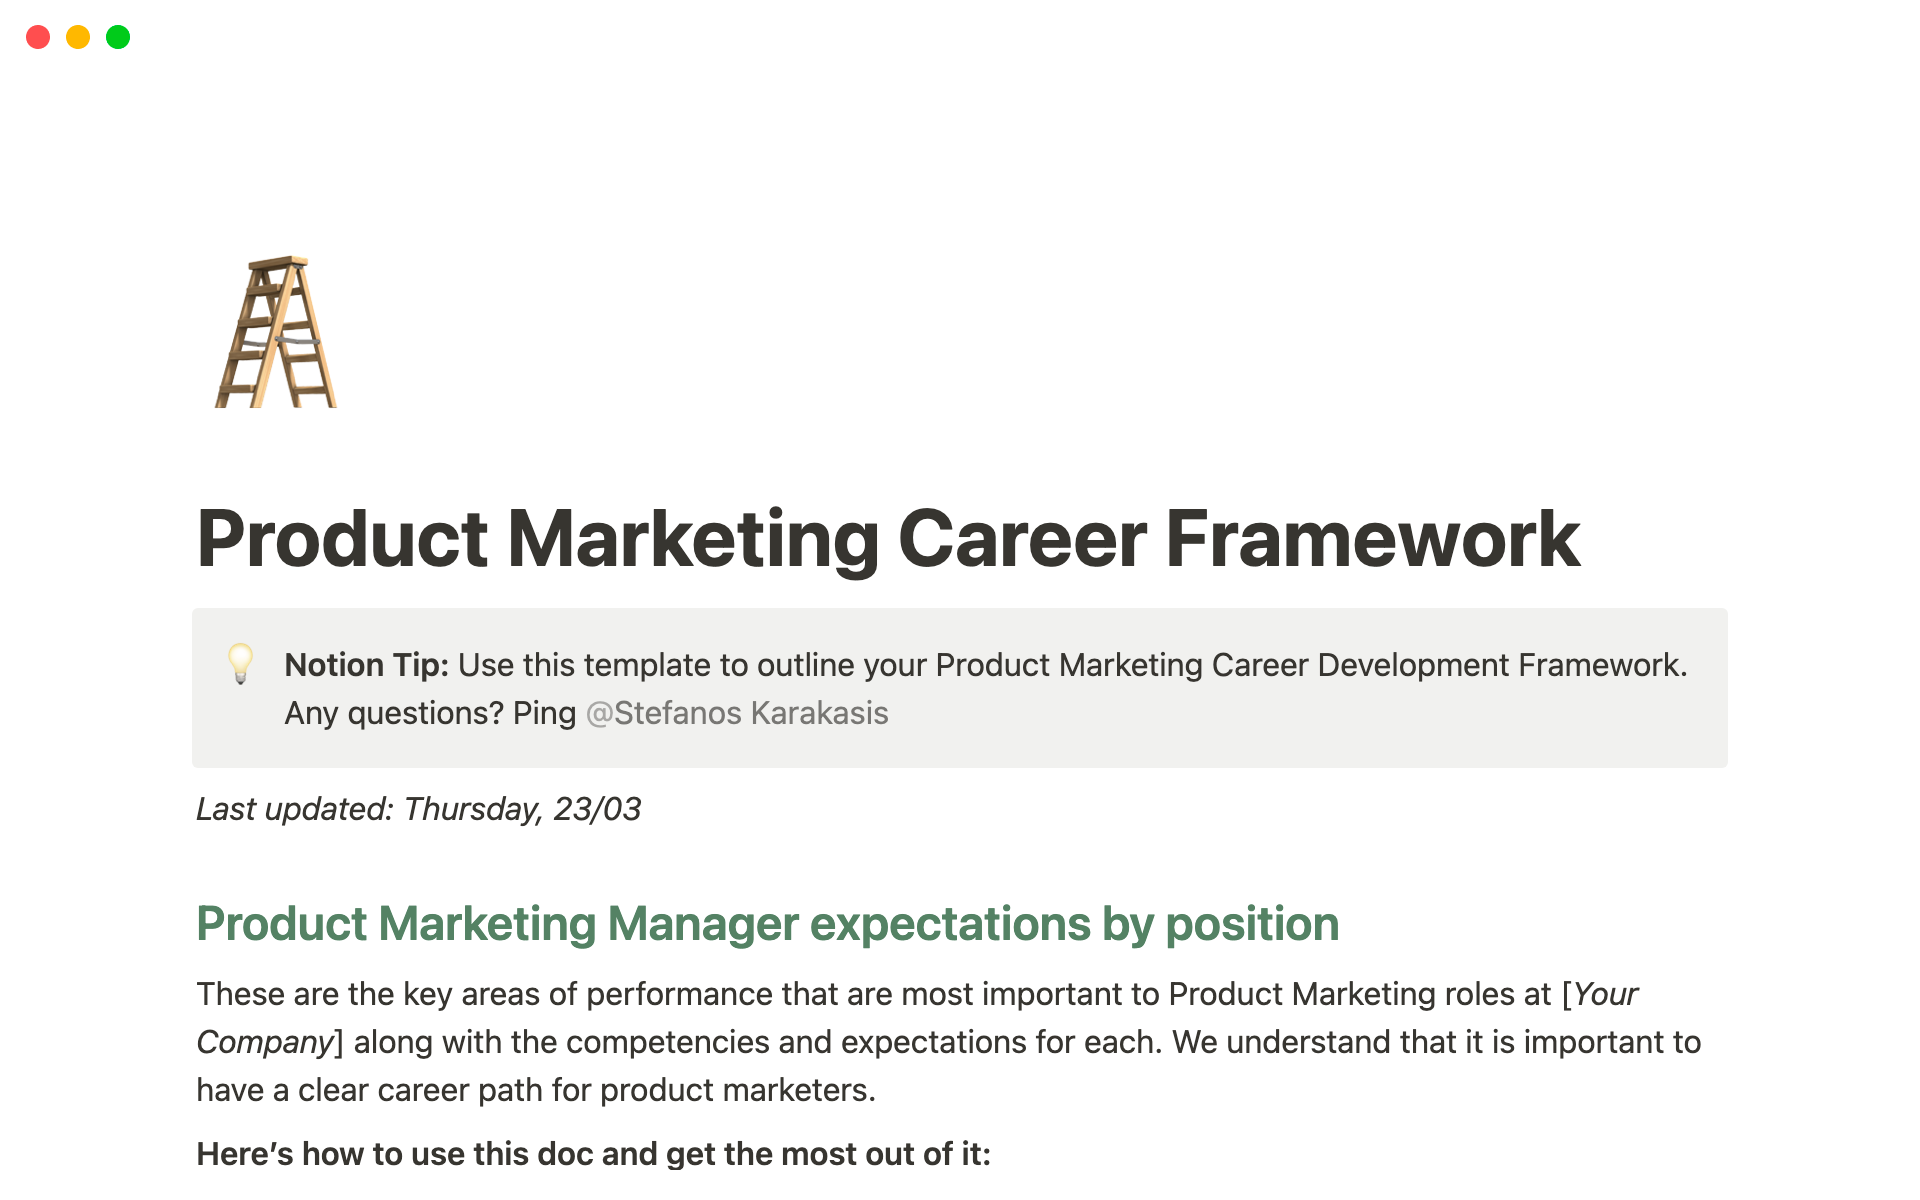 Aperçu du modèle de Product Marketing Career Framework